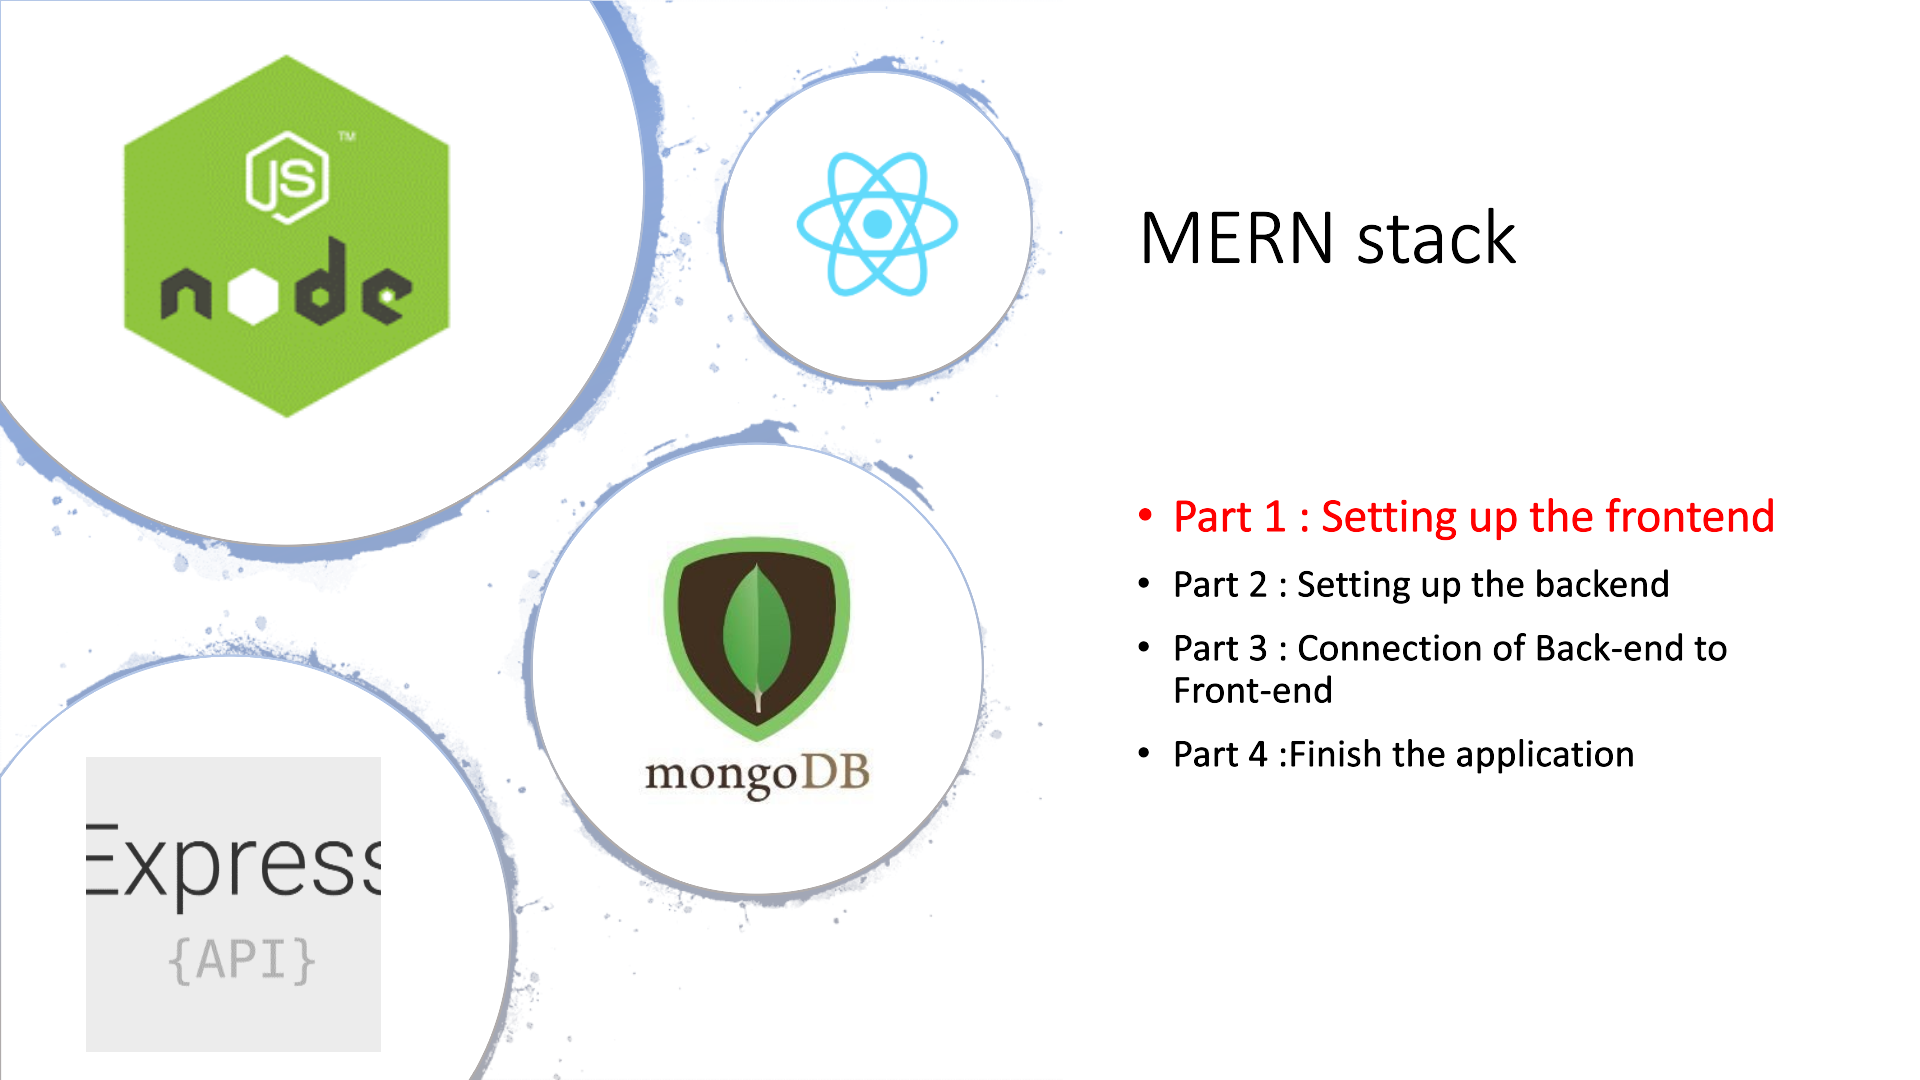 MERN stack application